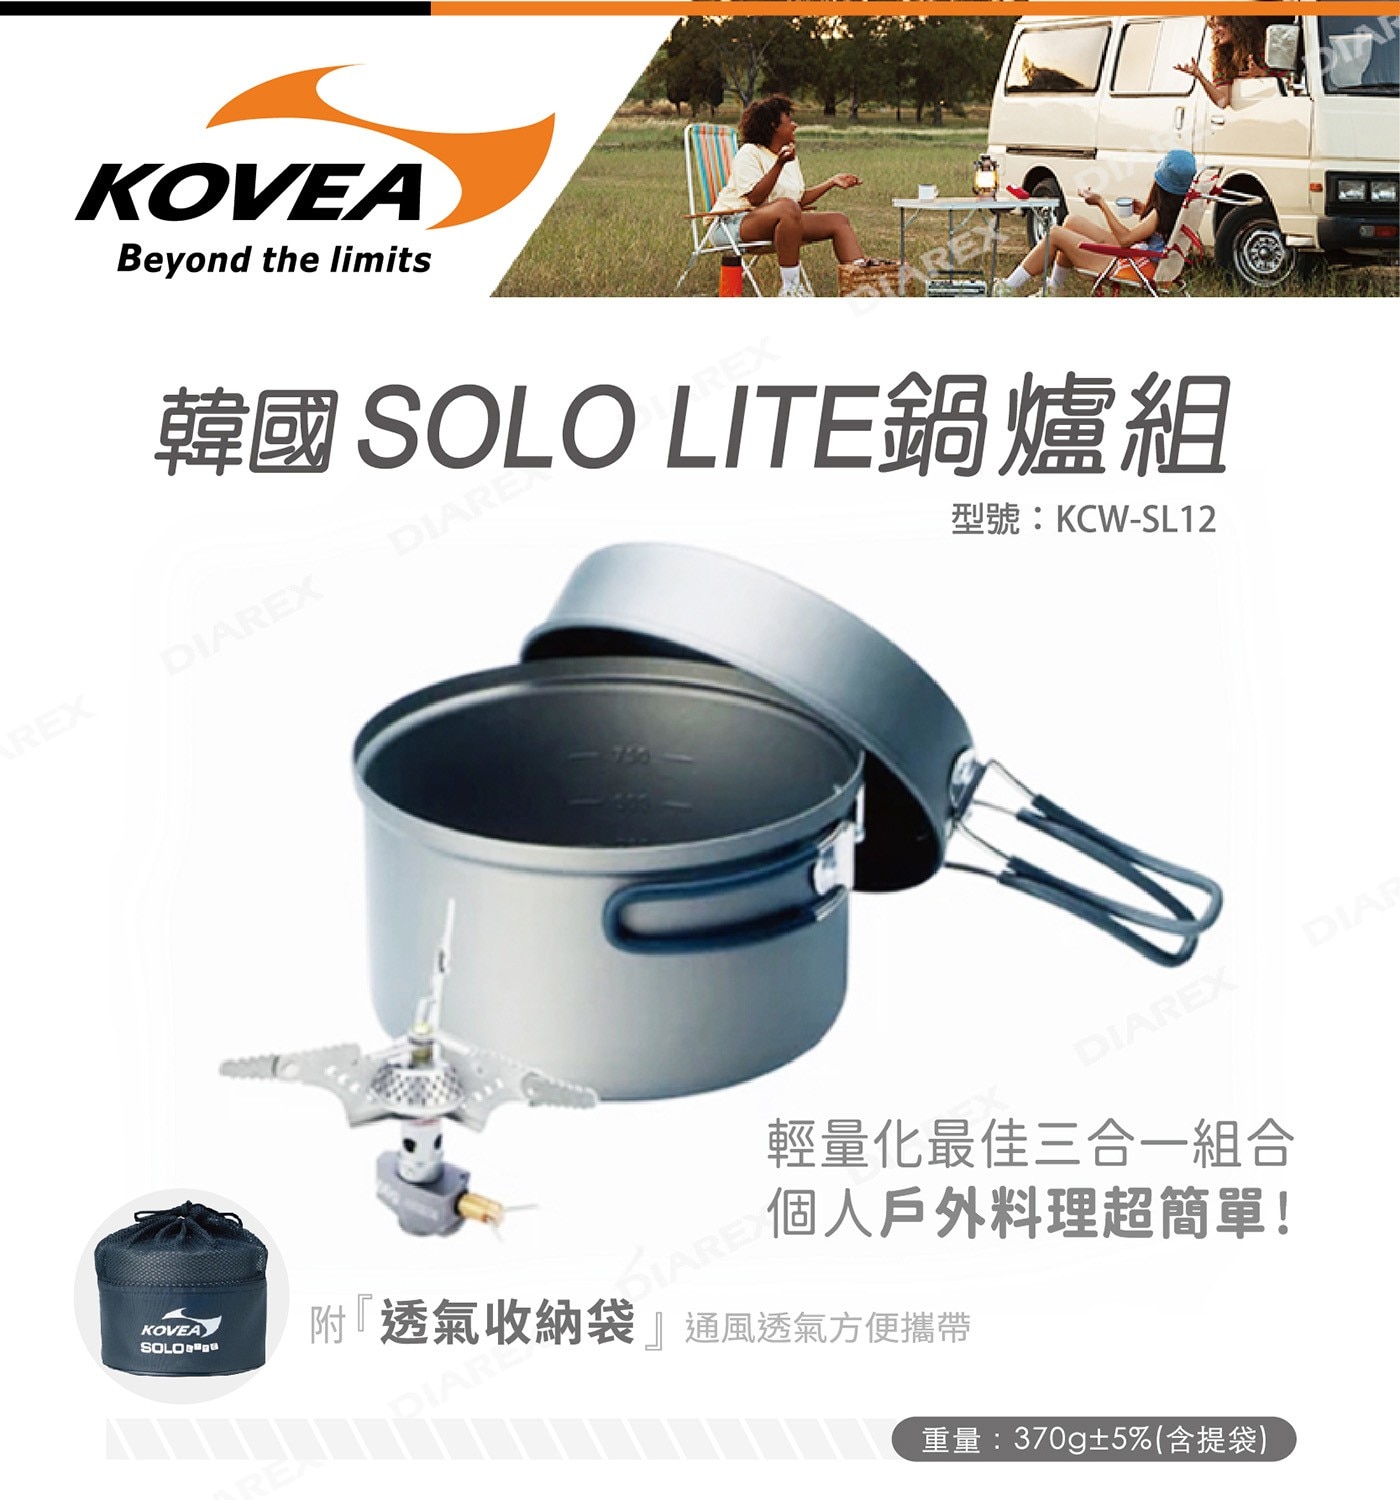 KOVEA SOLO LITE 鍋爐組，鍋具組合包含輕巧型的 Kovea Supalite 鈦爐，適合登山使用，整個組盒還有空間可放瓦斯罐，附有收納袋，簡易包裝方便攜帶。